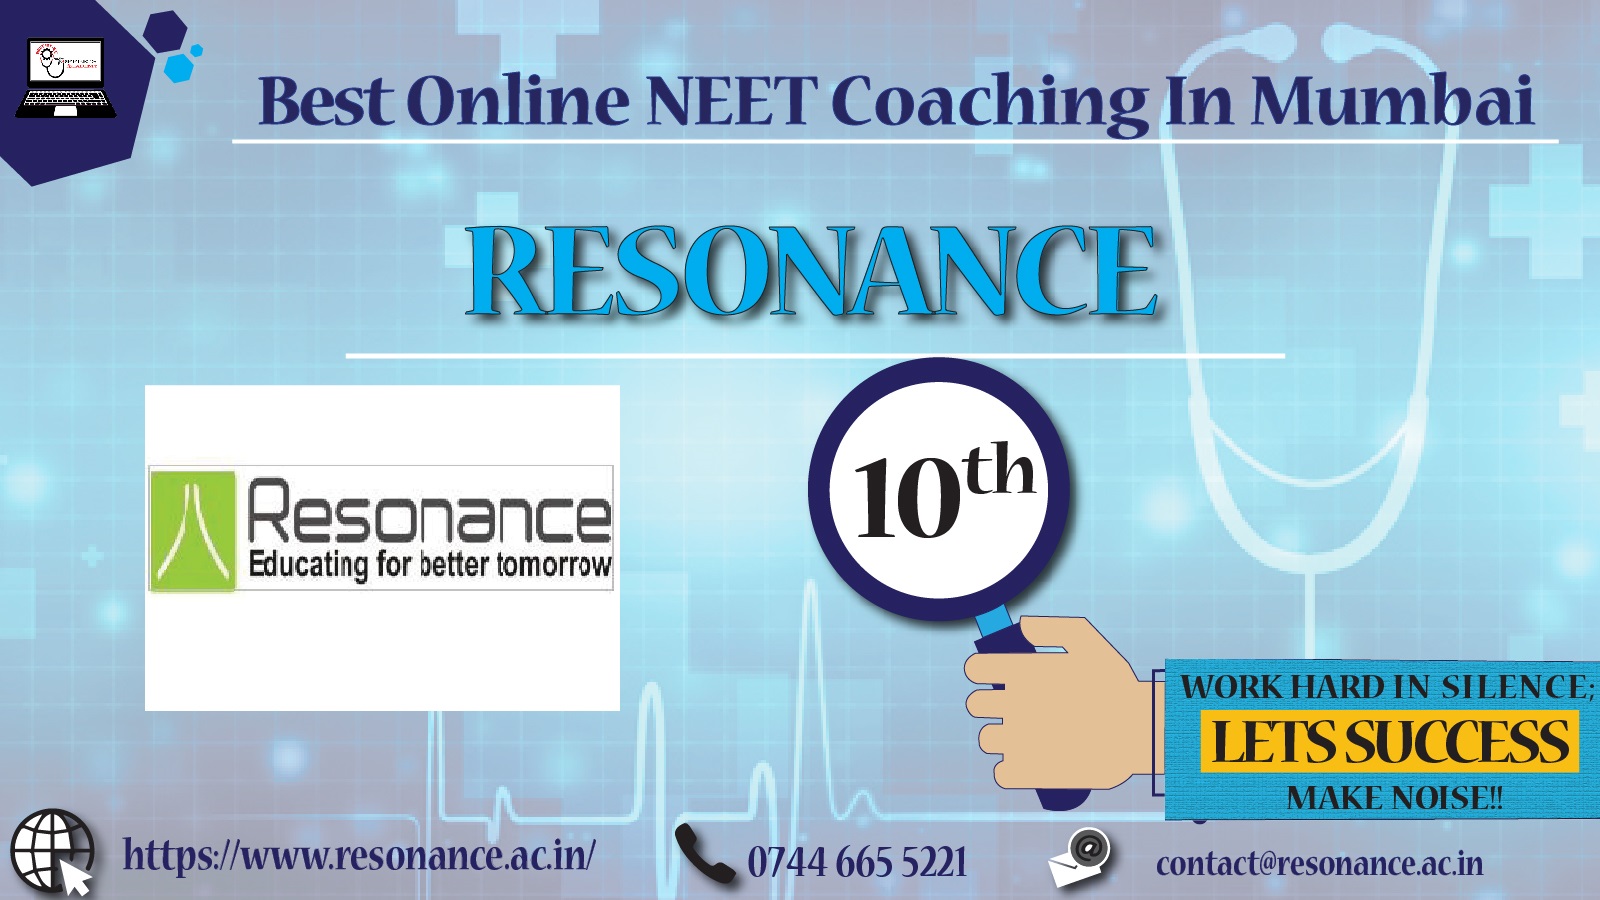 Top online Neet coaching in mumbai